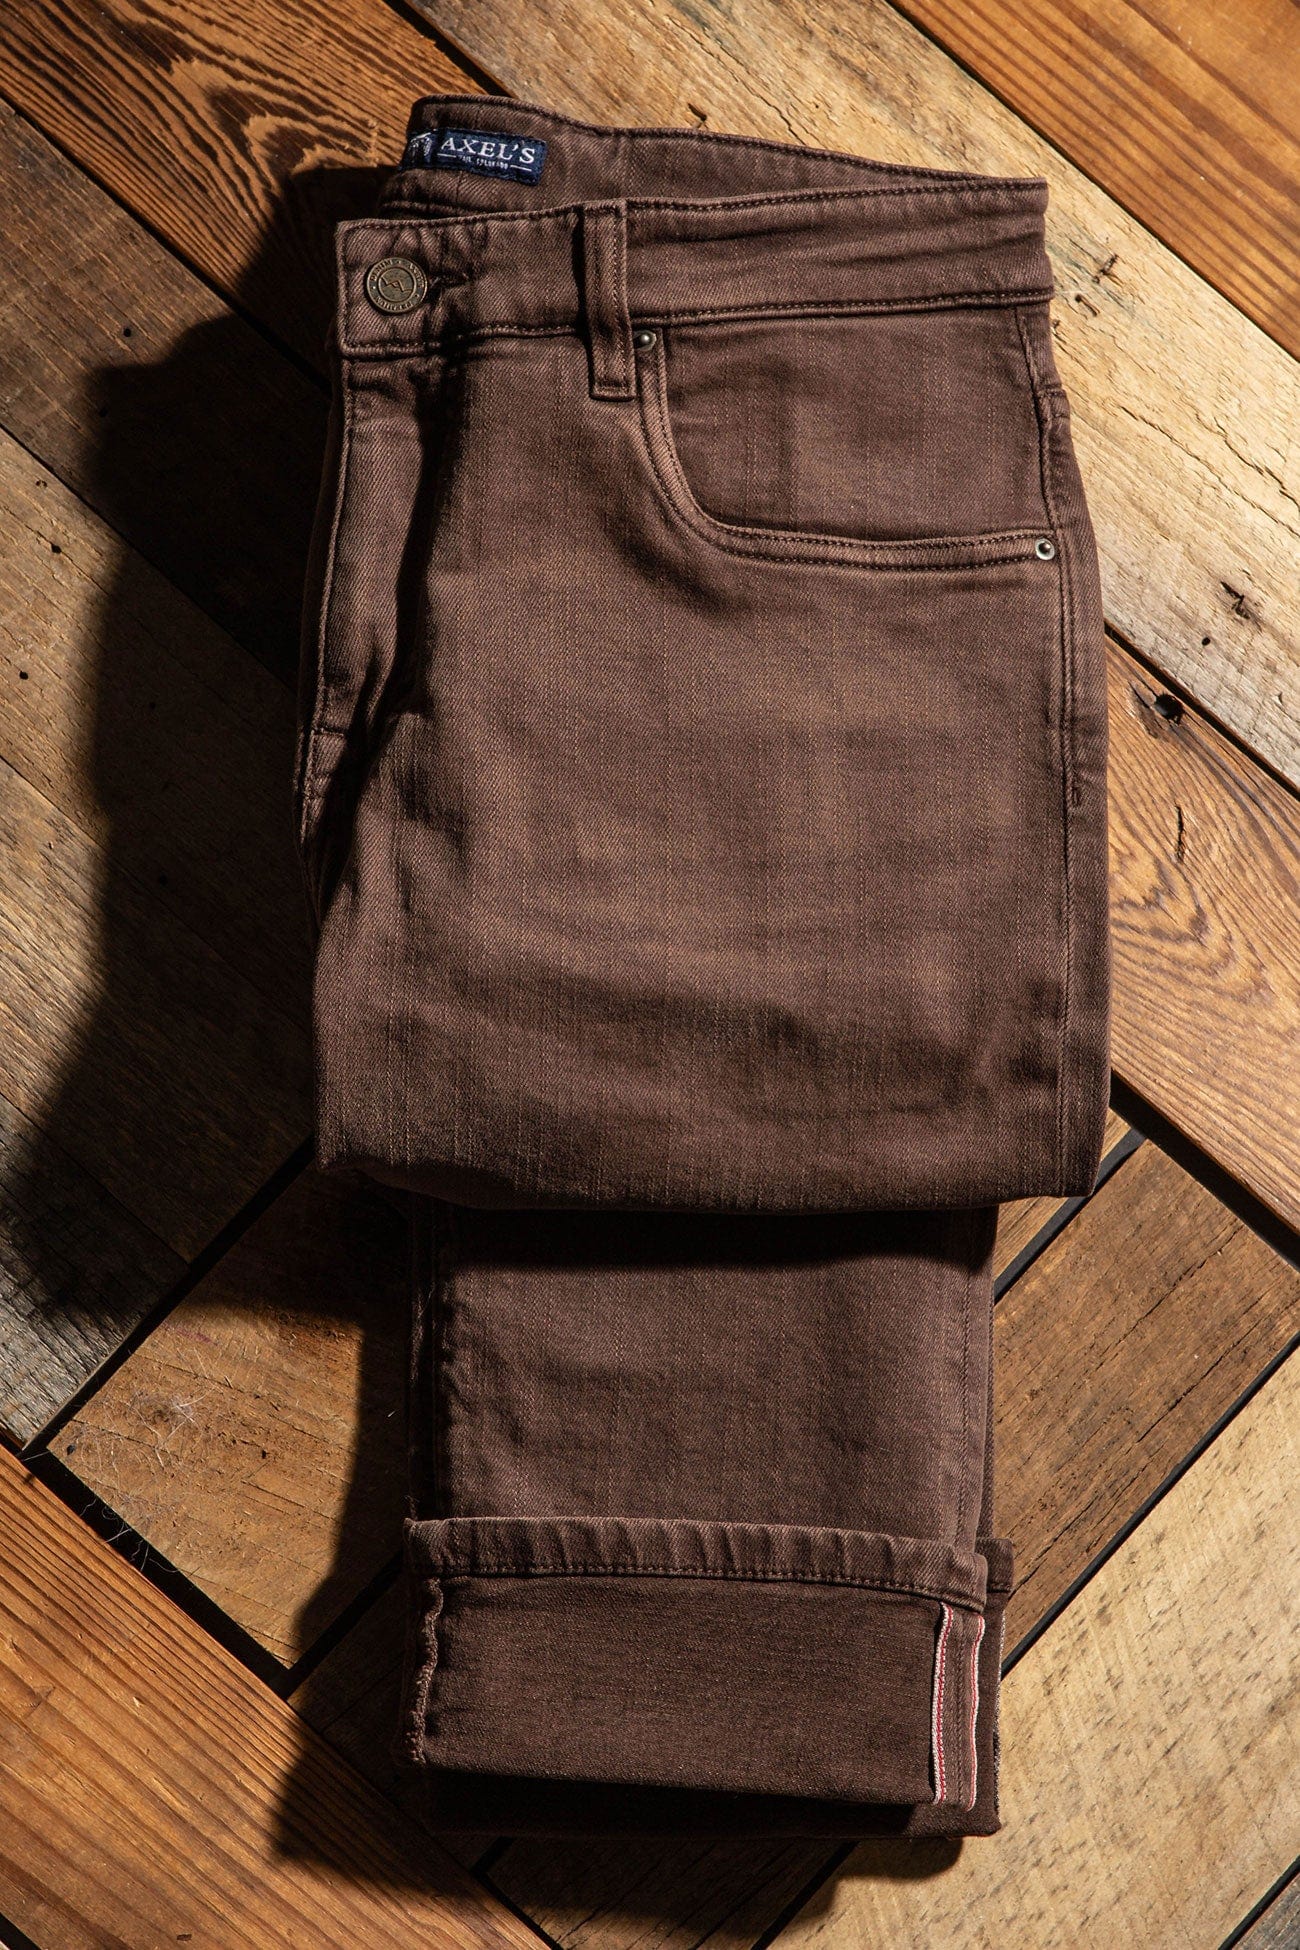 Axels Premium Denim Tucson Selvedge Denim In Wenge Mens - Pants - 5 Pocket